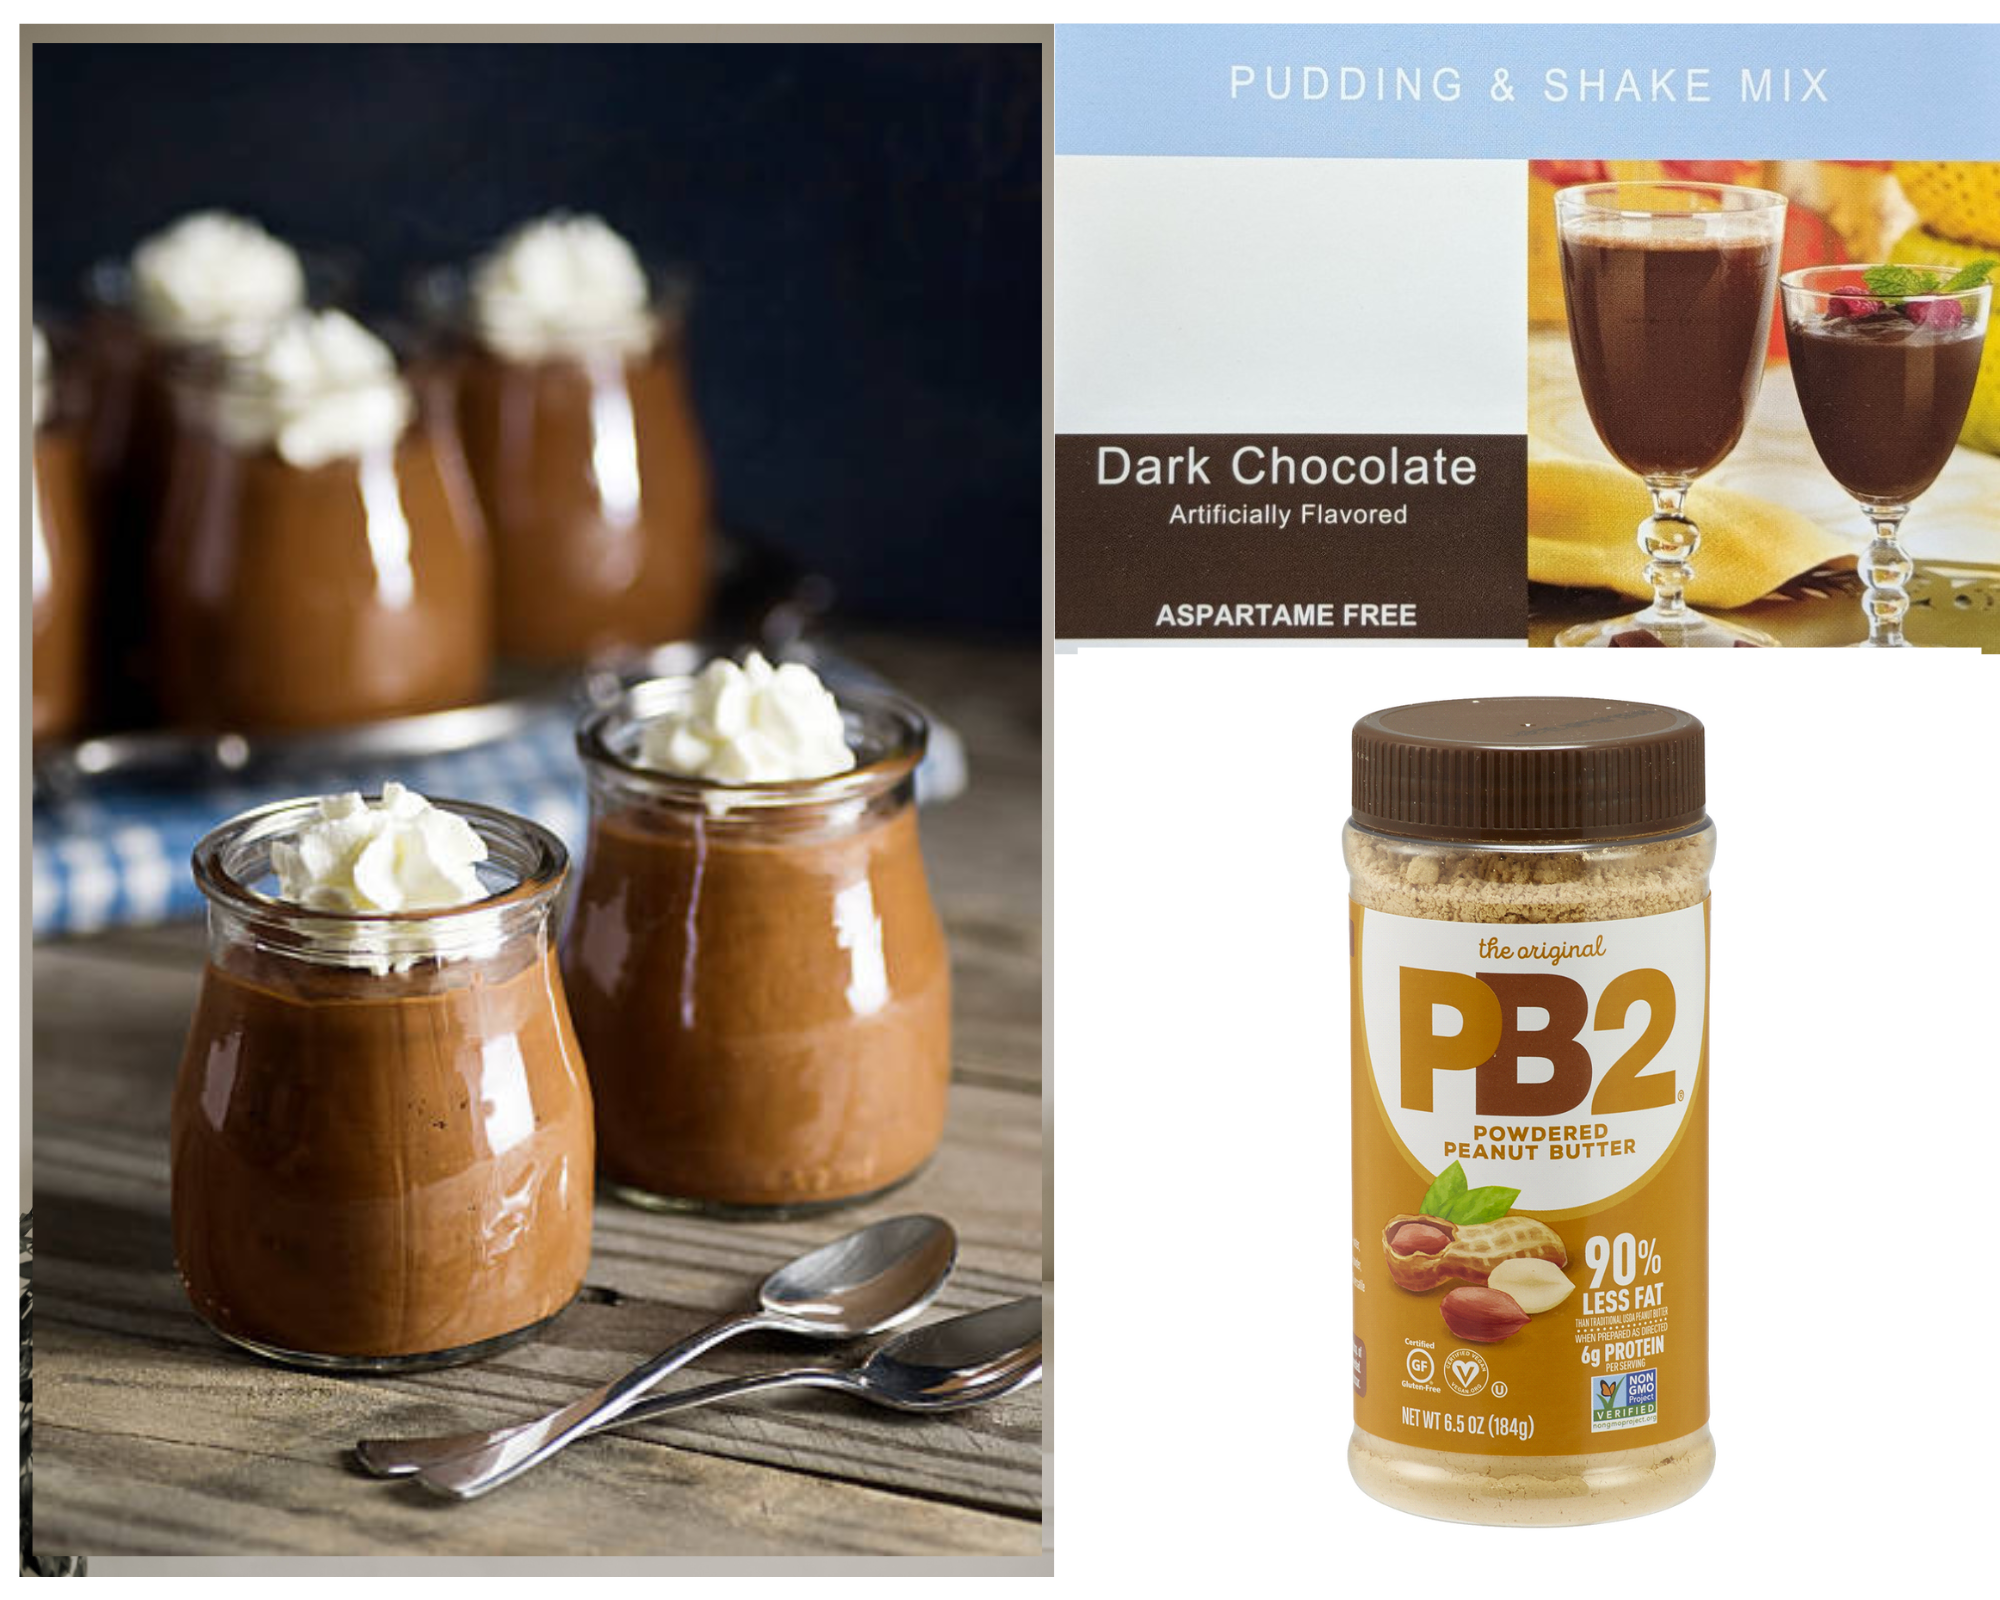 Dark Chocolate Pudding with PB2 powder!  